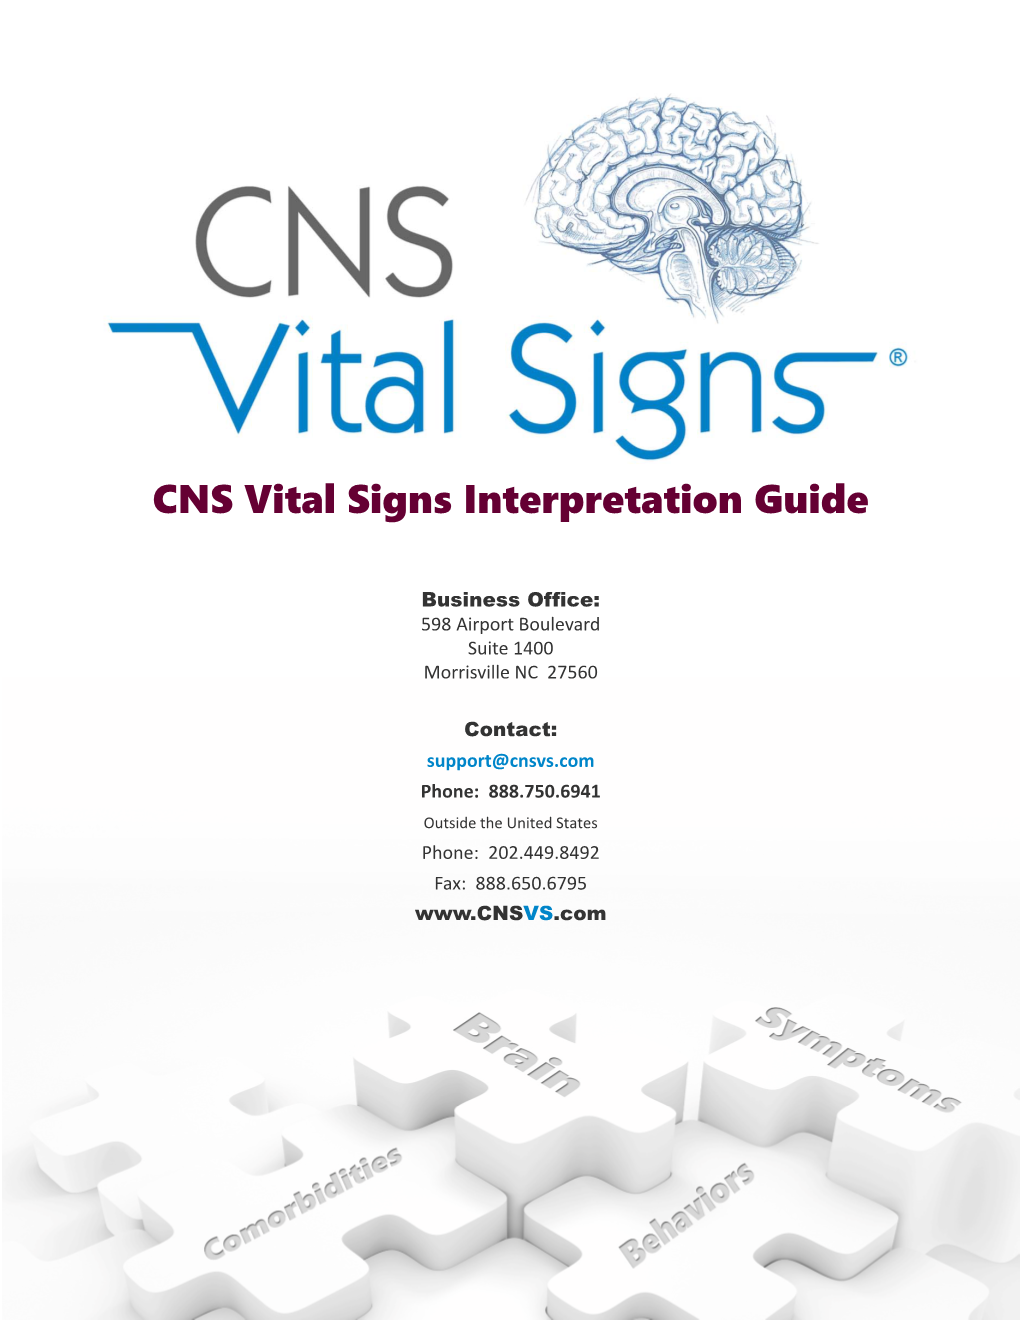 CNS Vital Signs Interpretation Guide